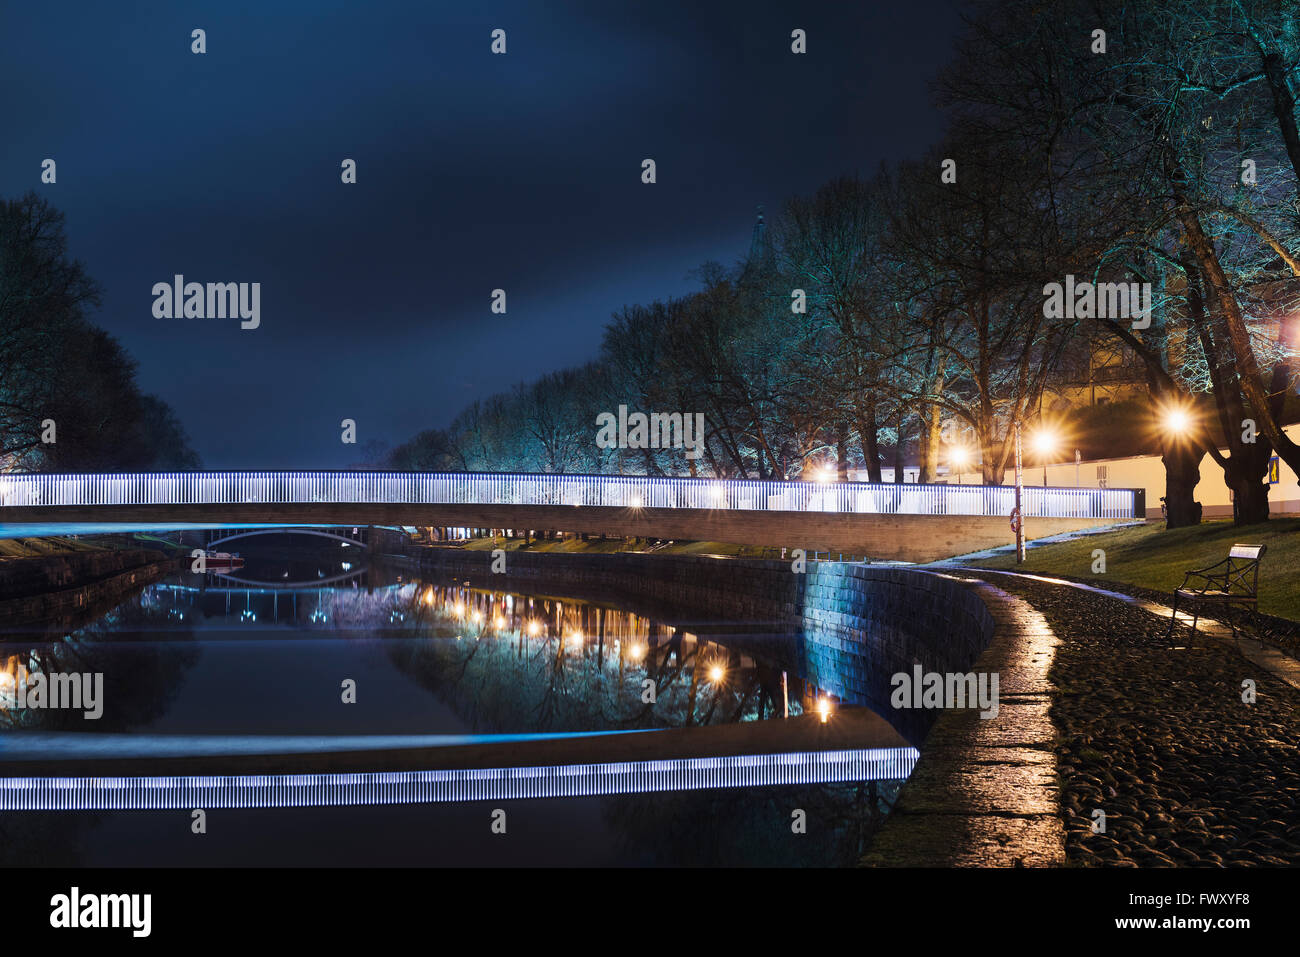 Finland, Varsinais-Suomi, Turku, Illuminated bridge over river at night Stock Photo